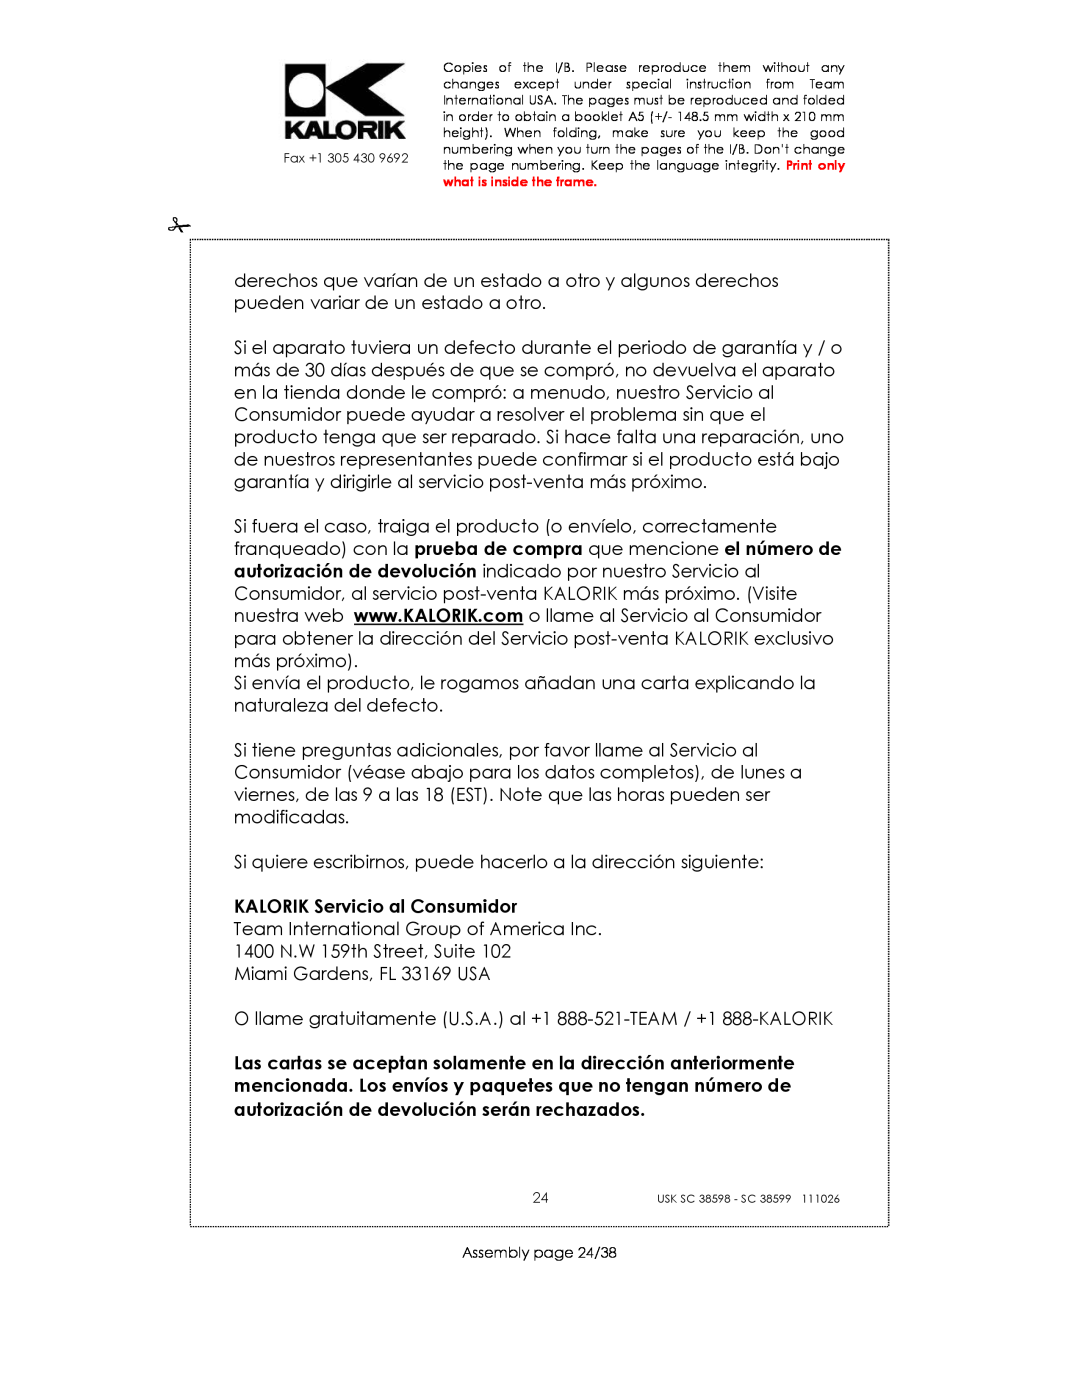 Kalorik usk sc 38598, 38599 manual KALORIK Servicio al Consumidor, Assembly page 24/38 